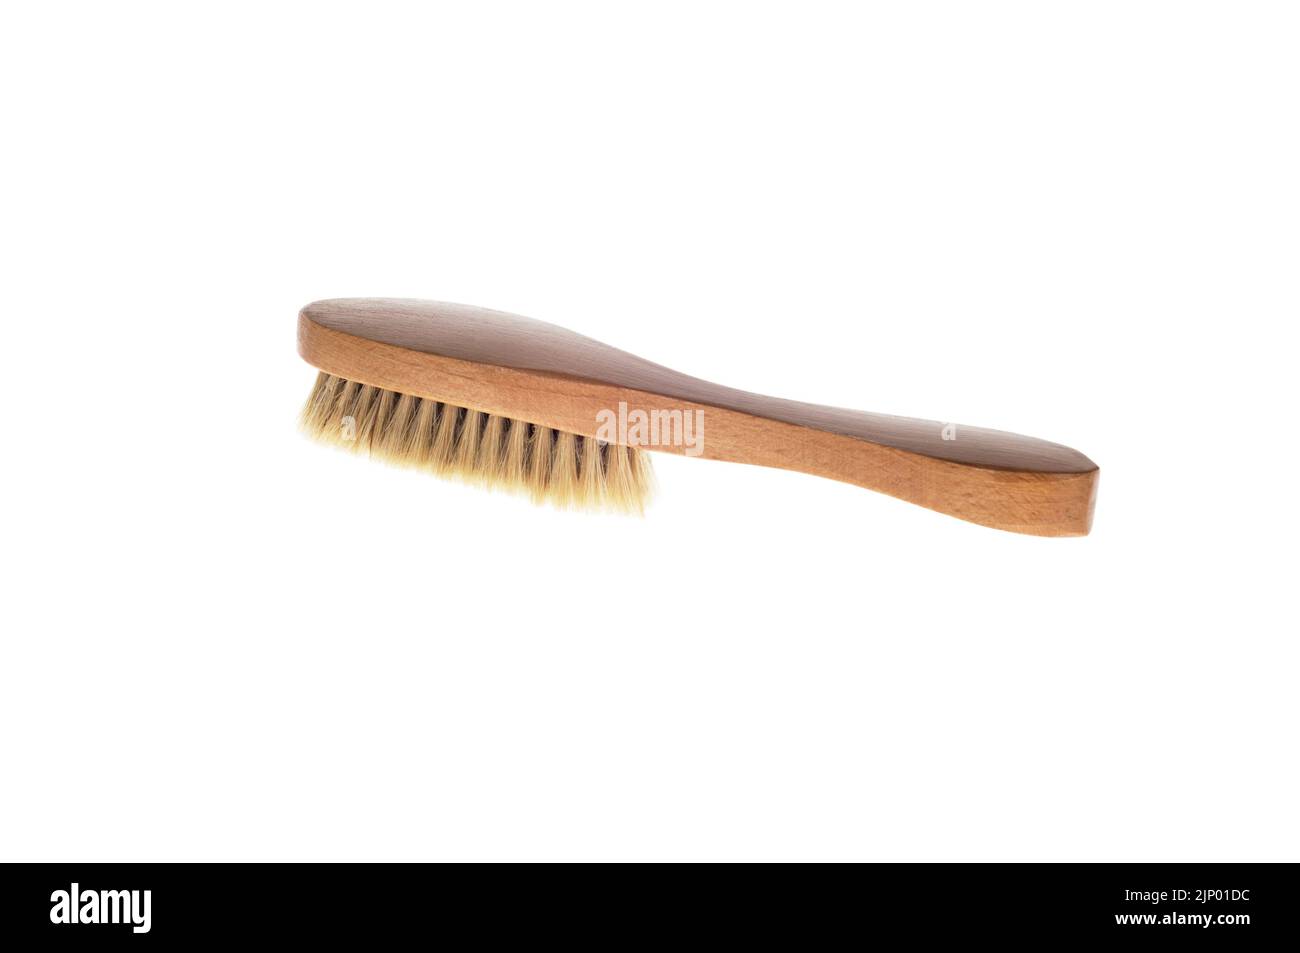 Wooden cleaning scrub brush on white background Stock Photo